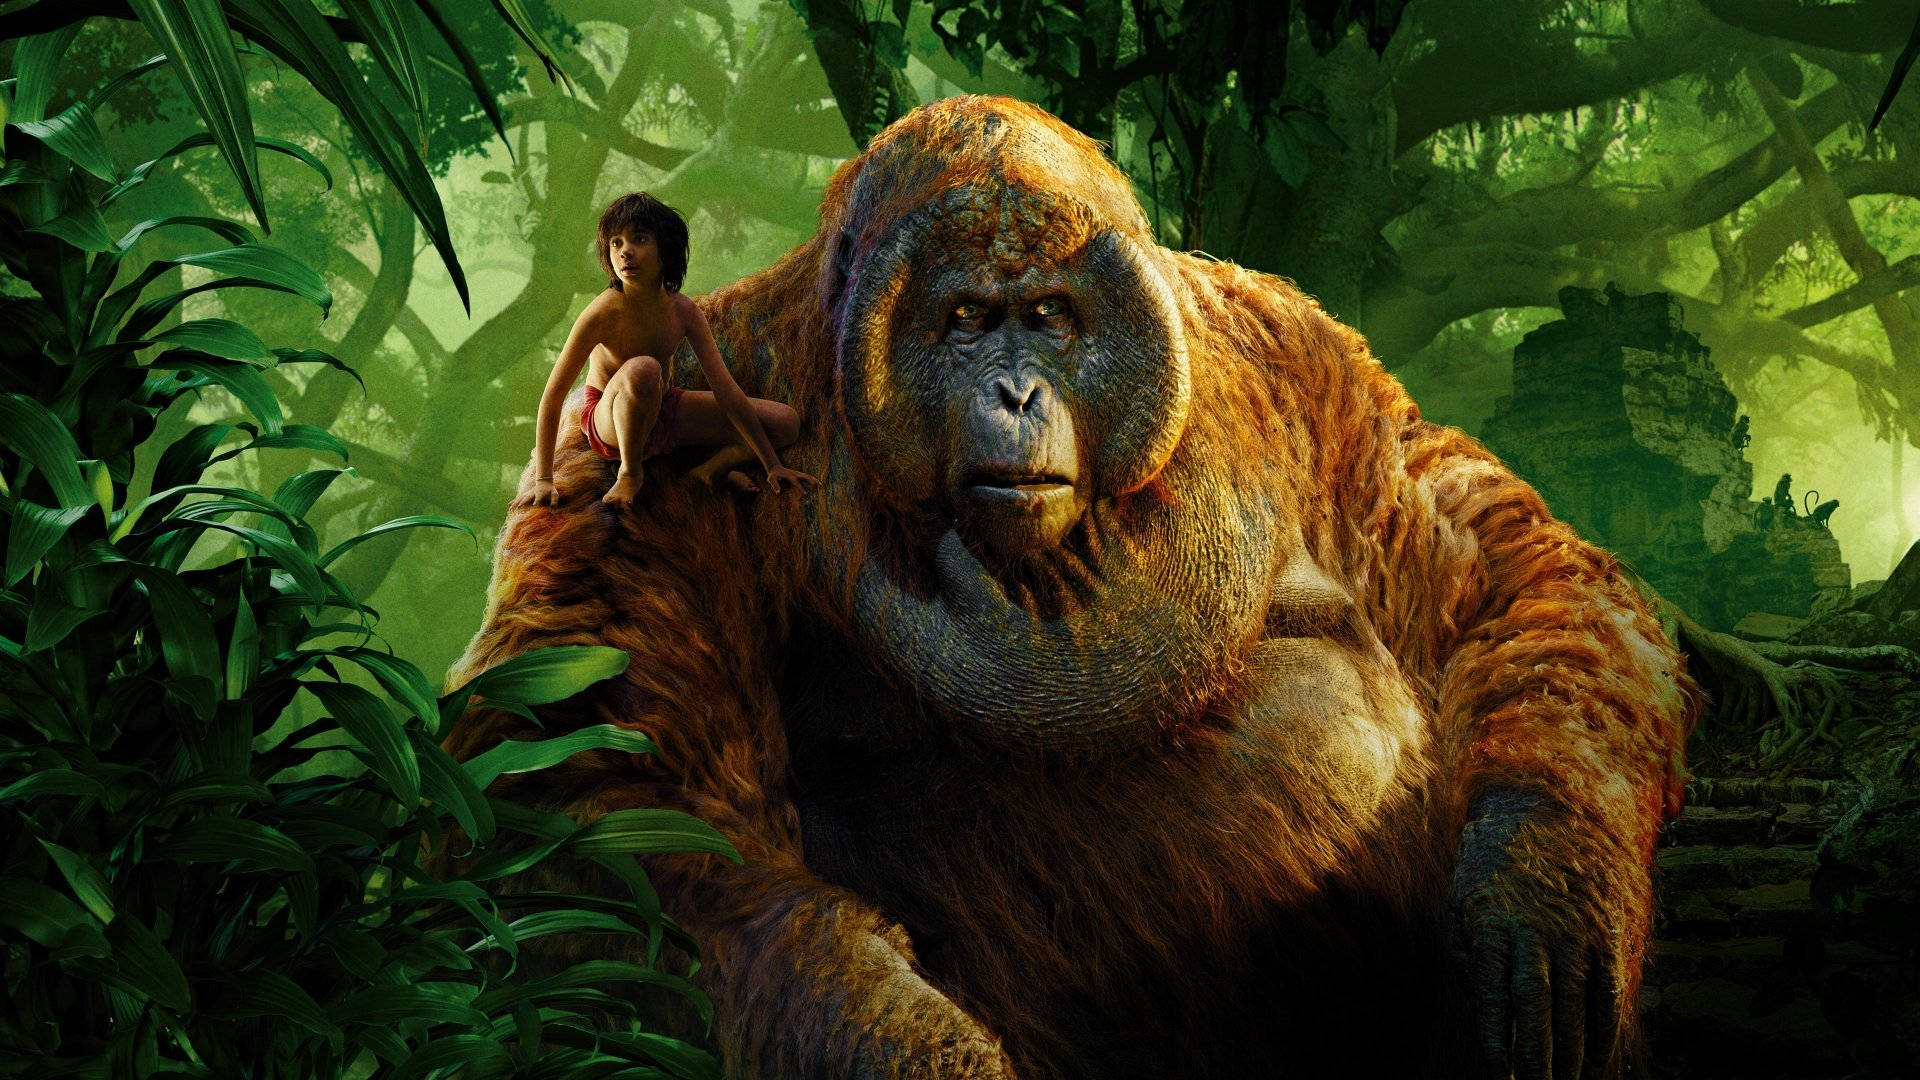 The Jungle Book Mowgli And King Louie